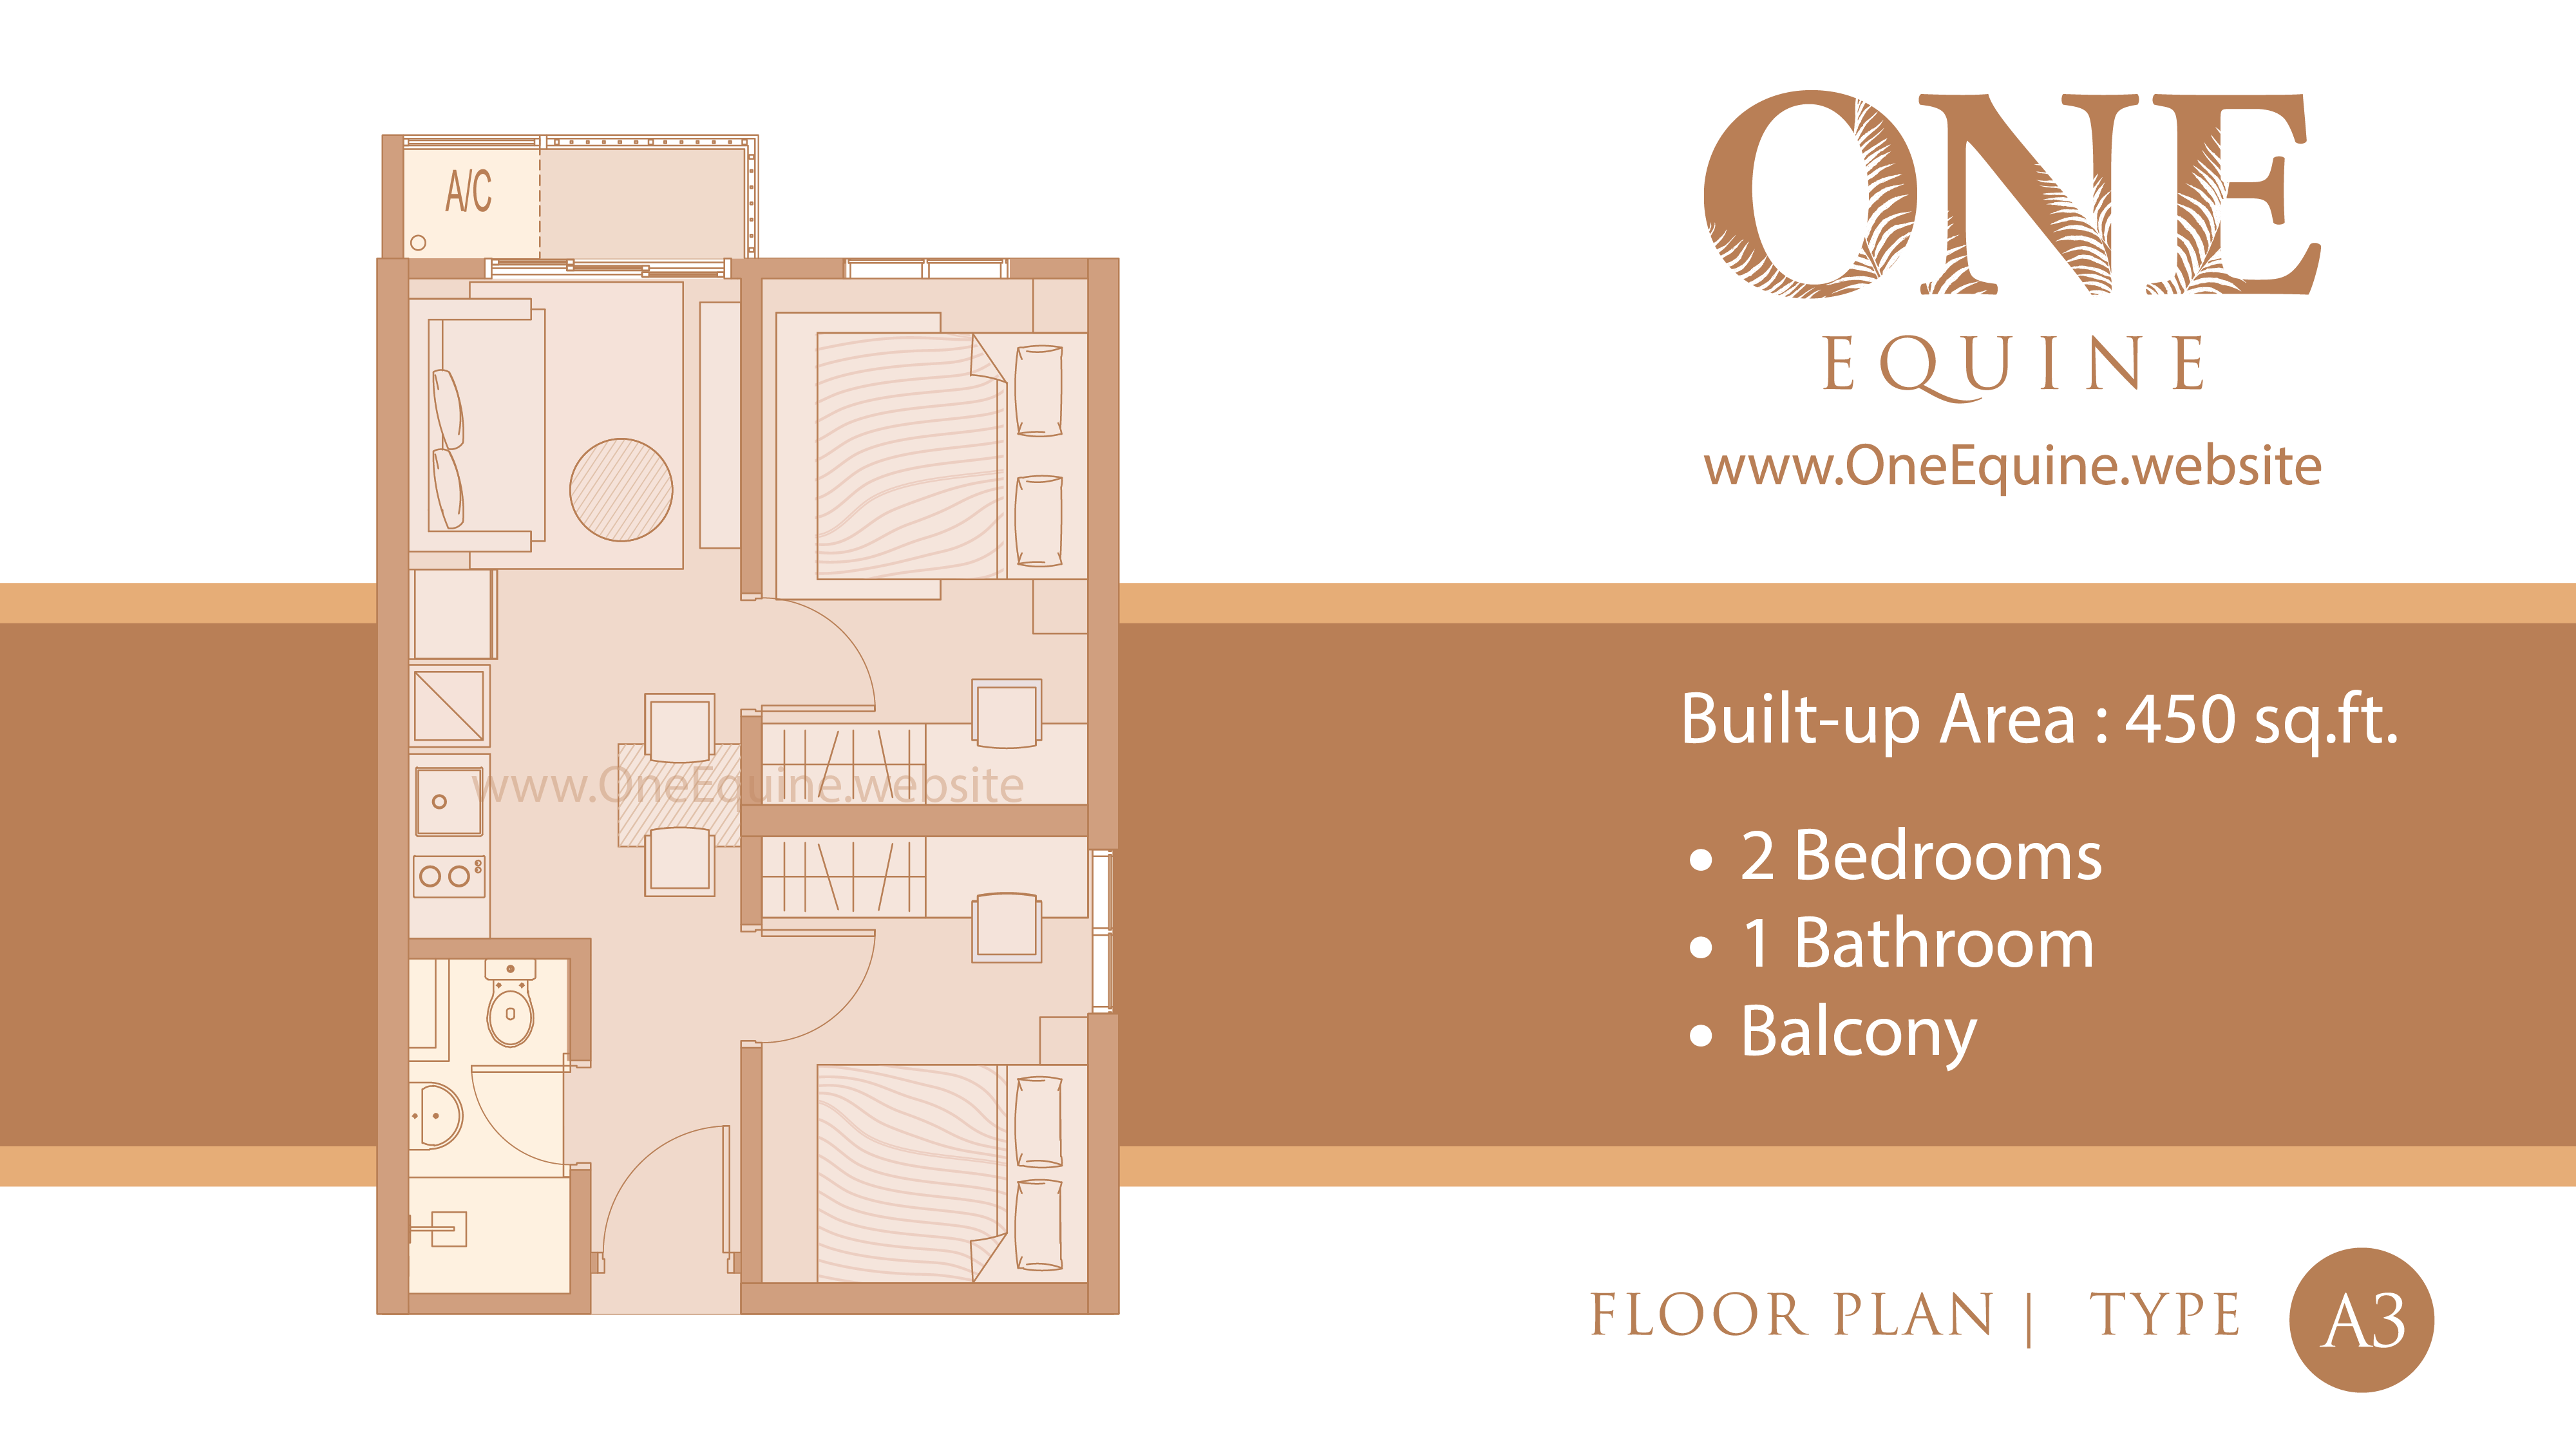 One Equine Park Seri Kembangan - SOHO 2 Bedrooms 1 Bathroom Balcony - Floor Plan Type A3 - 450 sqft